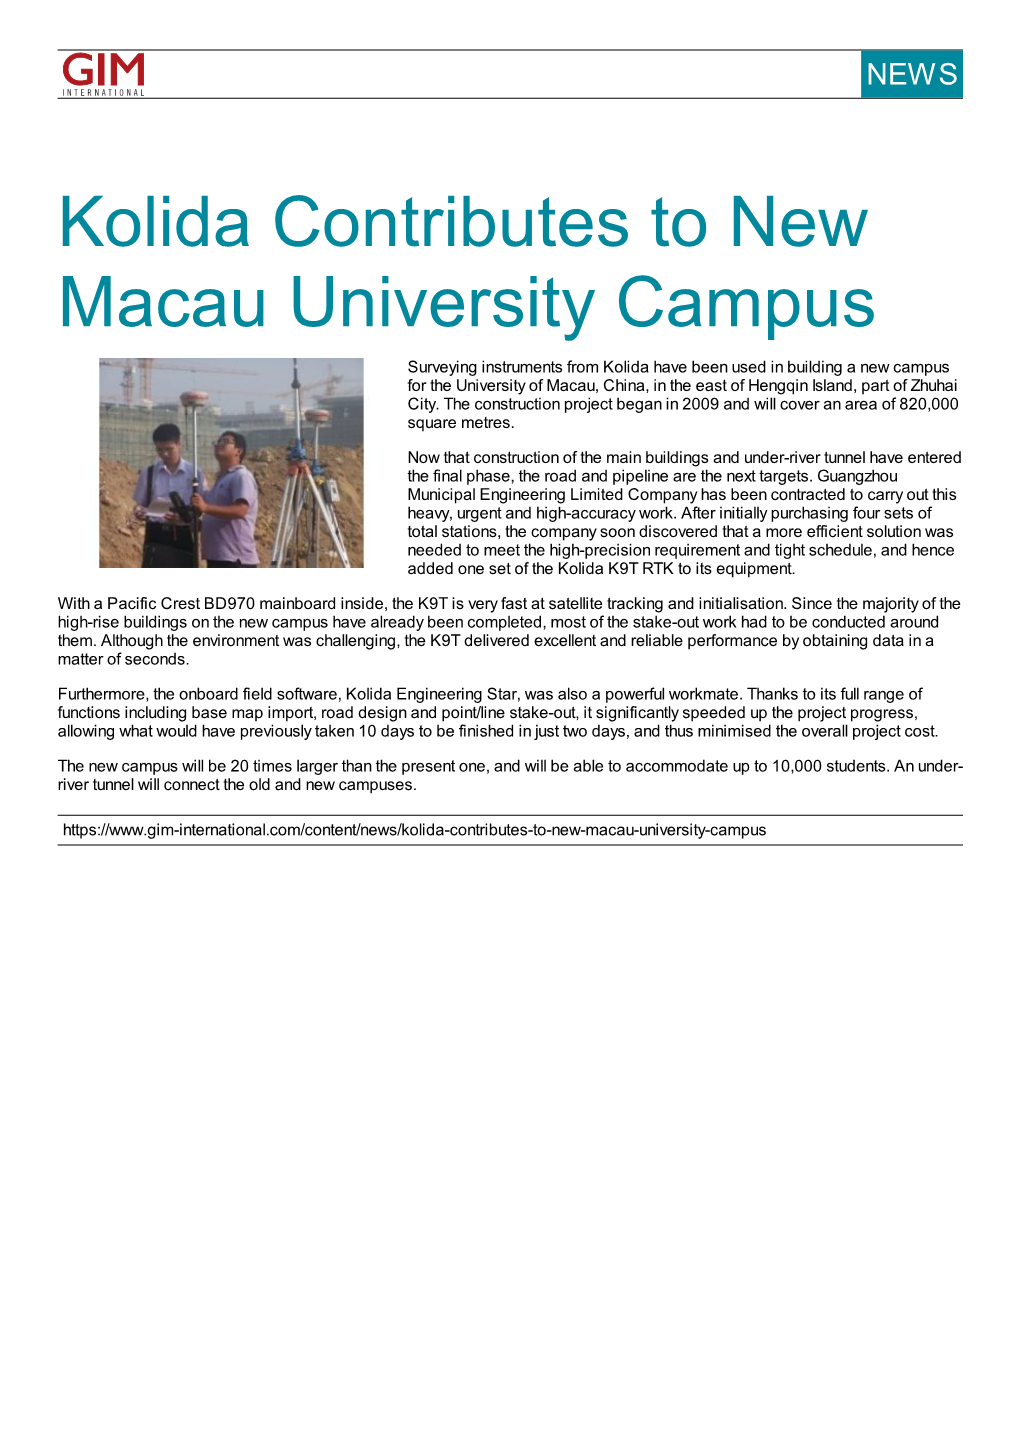 Kolida Contributes to New Macau University Campus